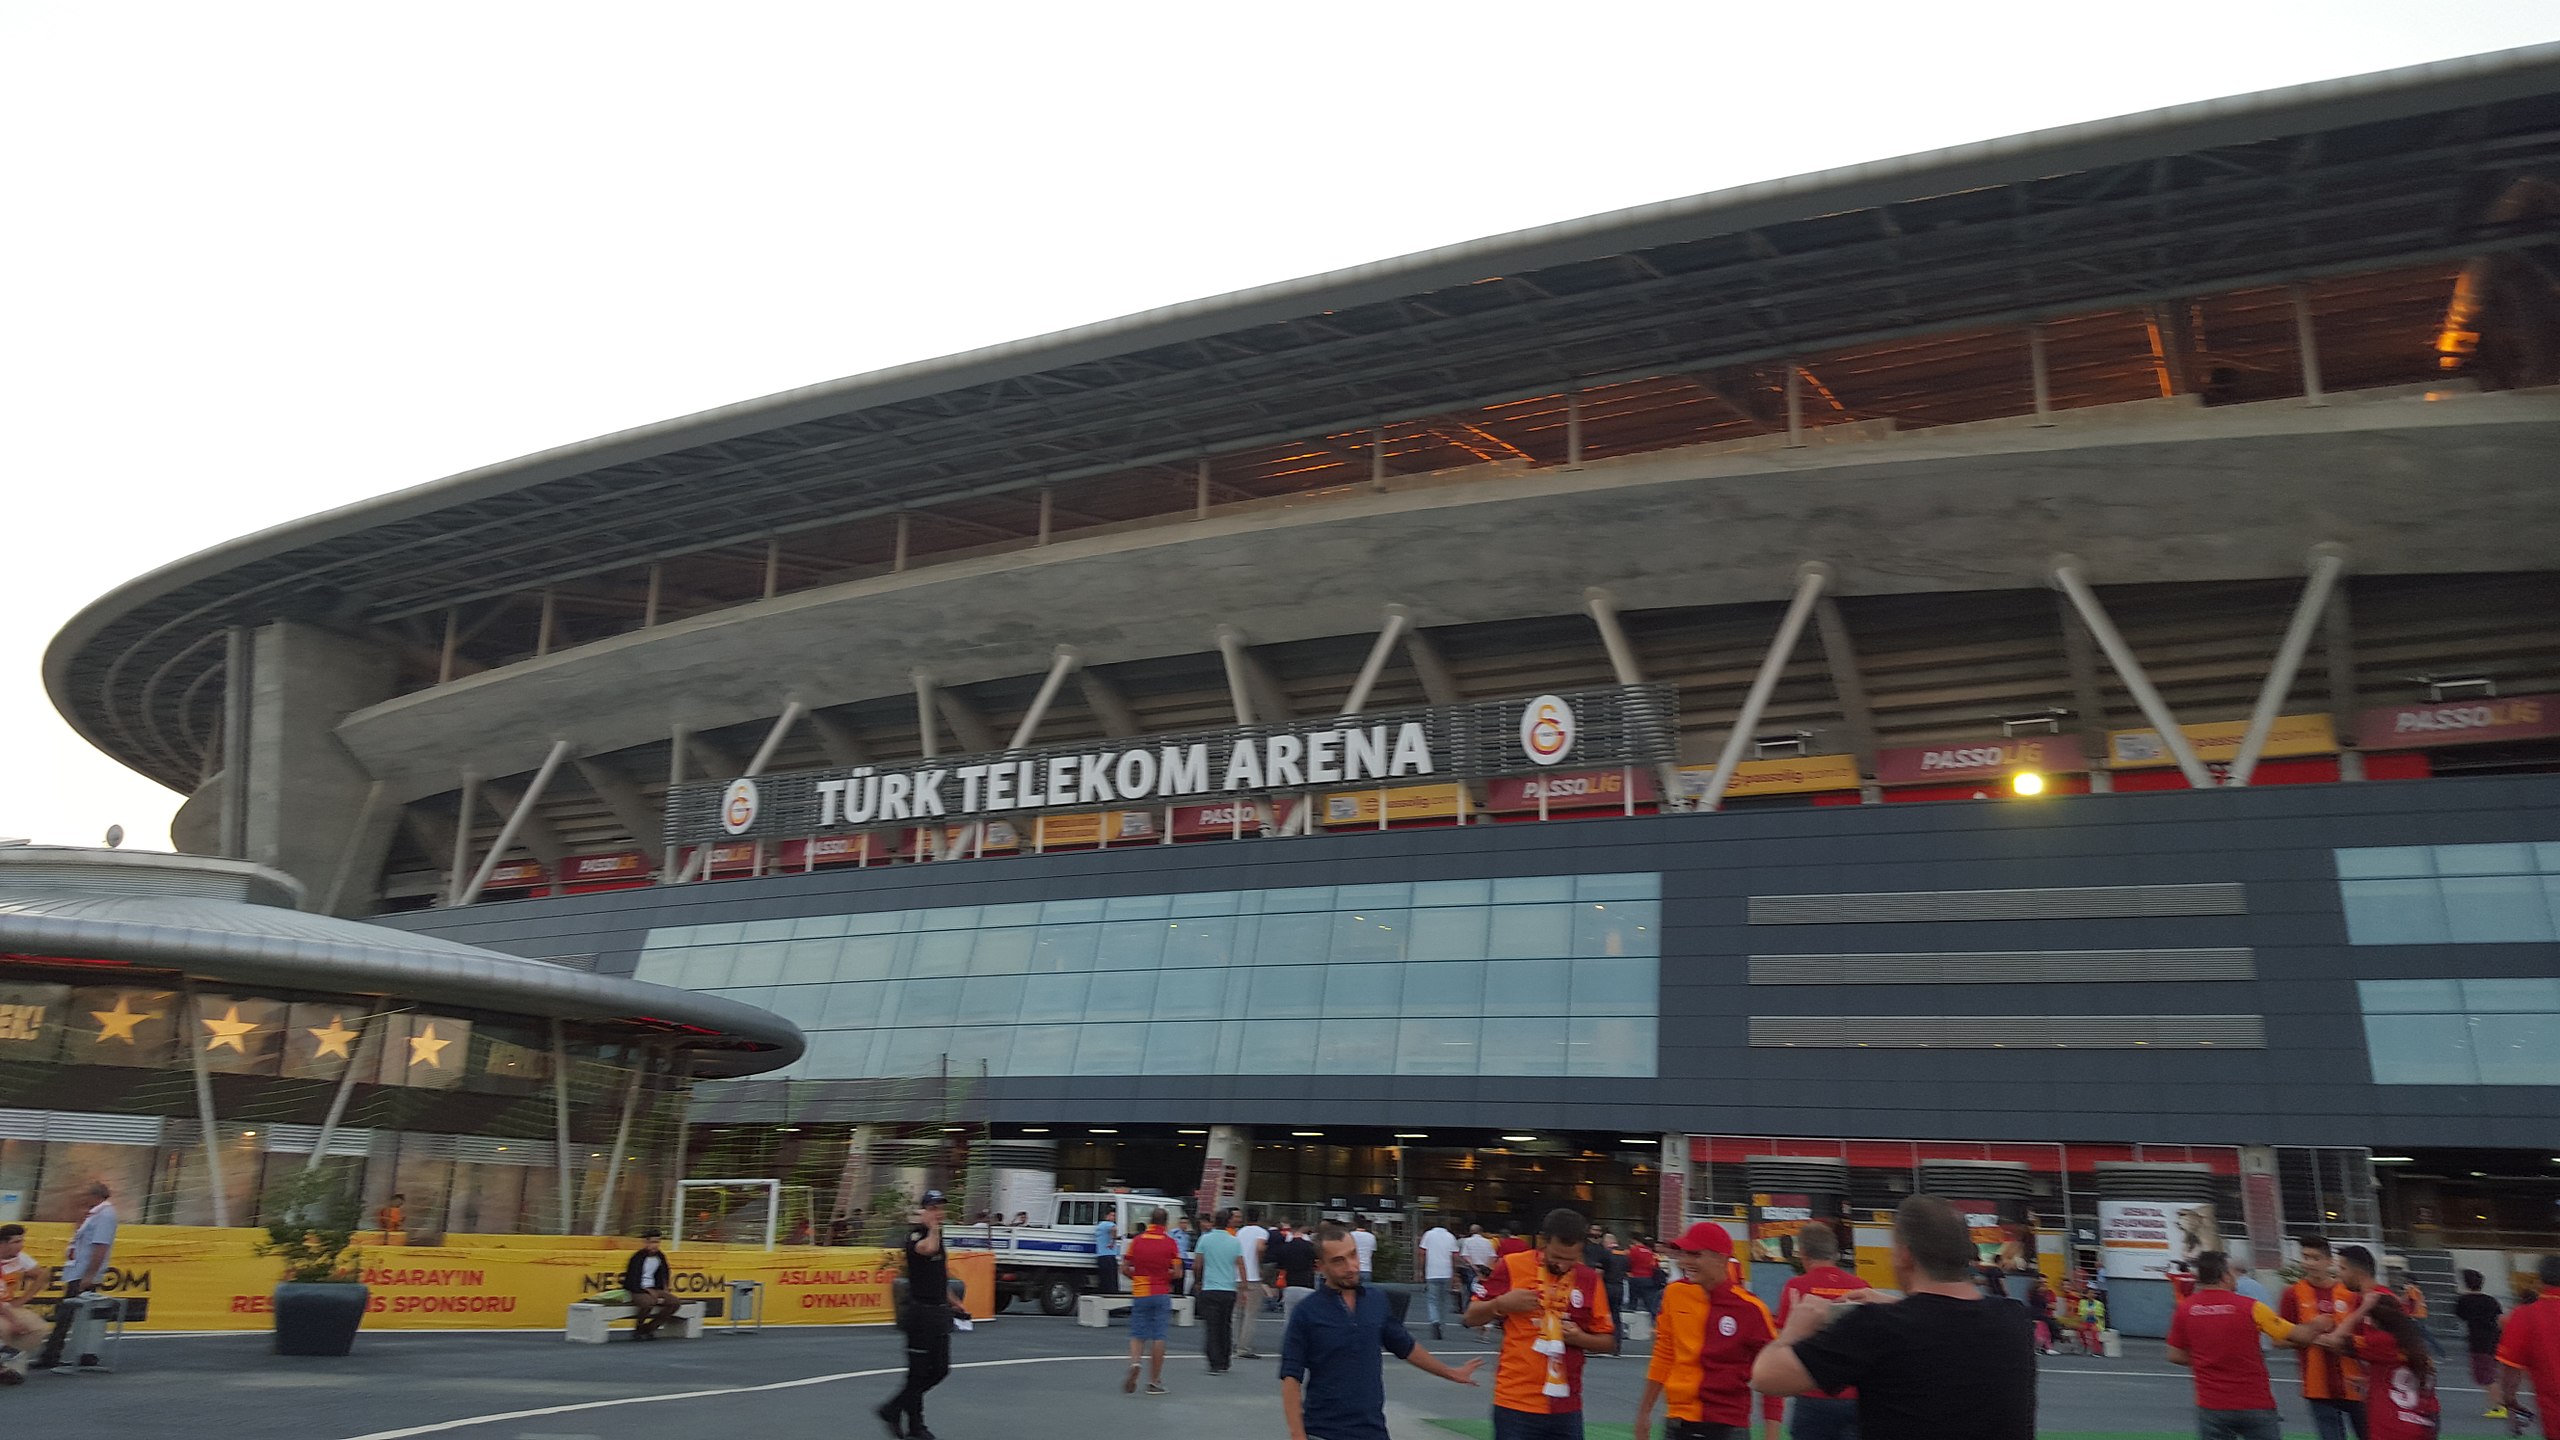 Galatasaray vs. Besiktas: Live Stream, TV Channel, Start Time